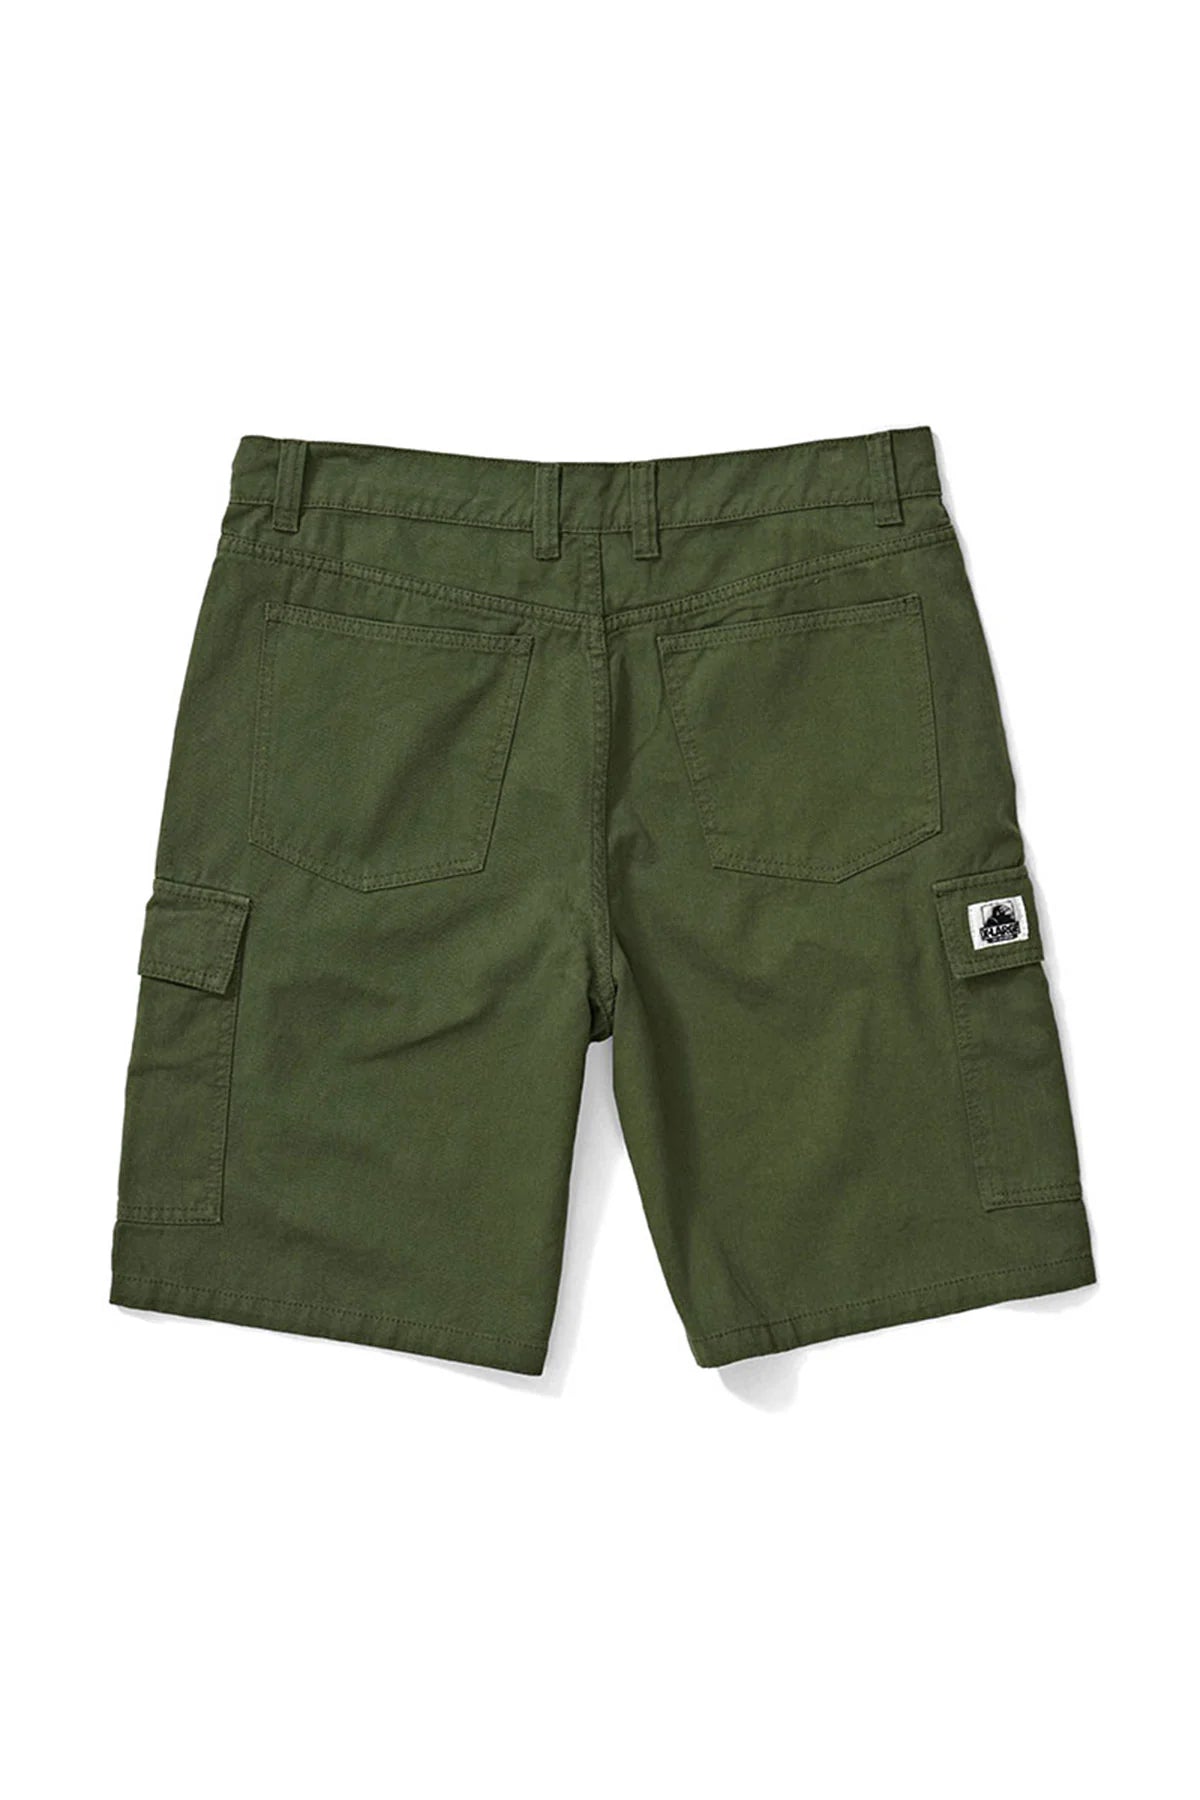 91 Cargo Shorts - Military Green